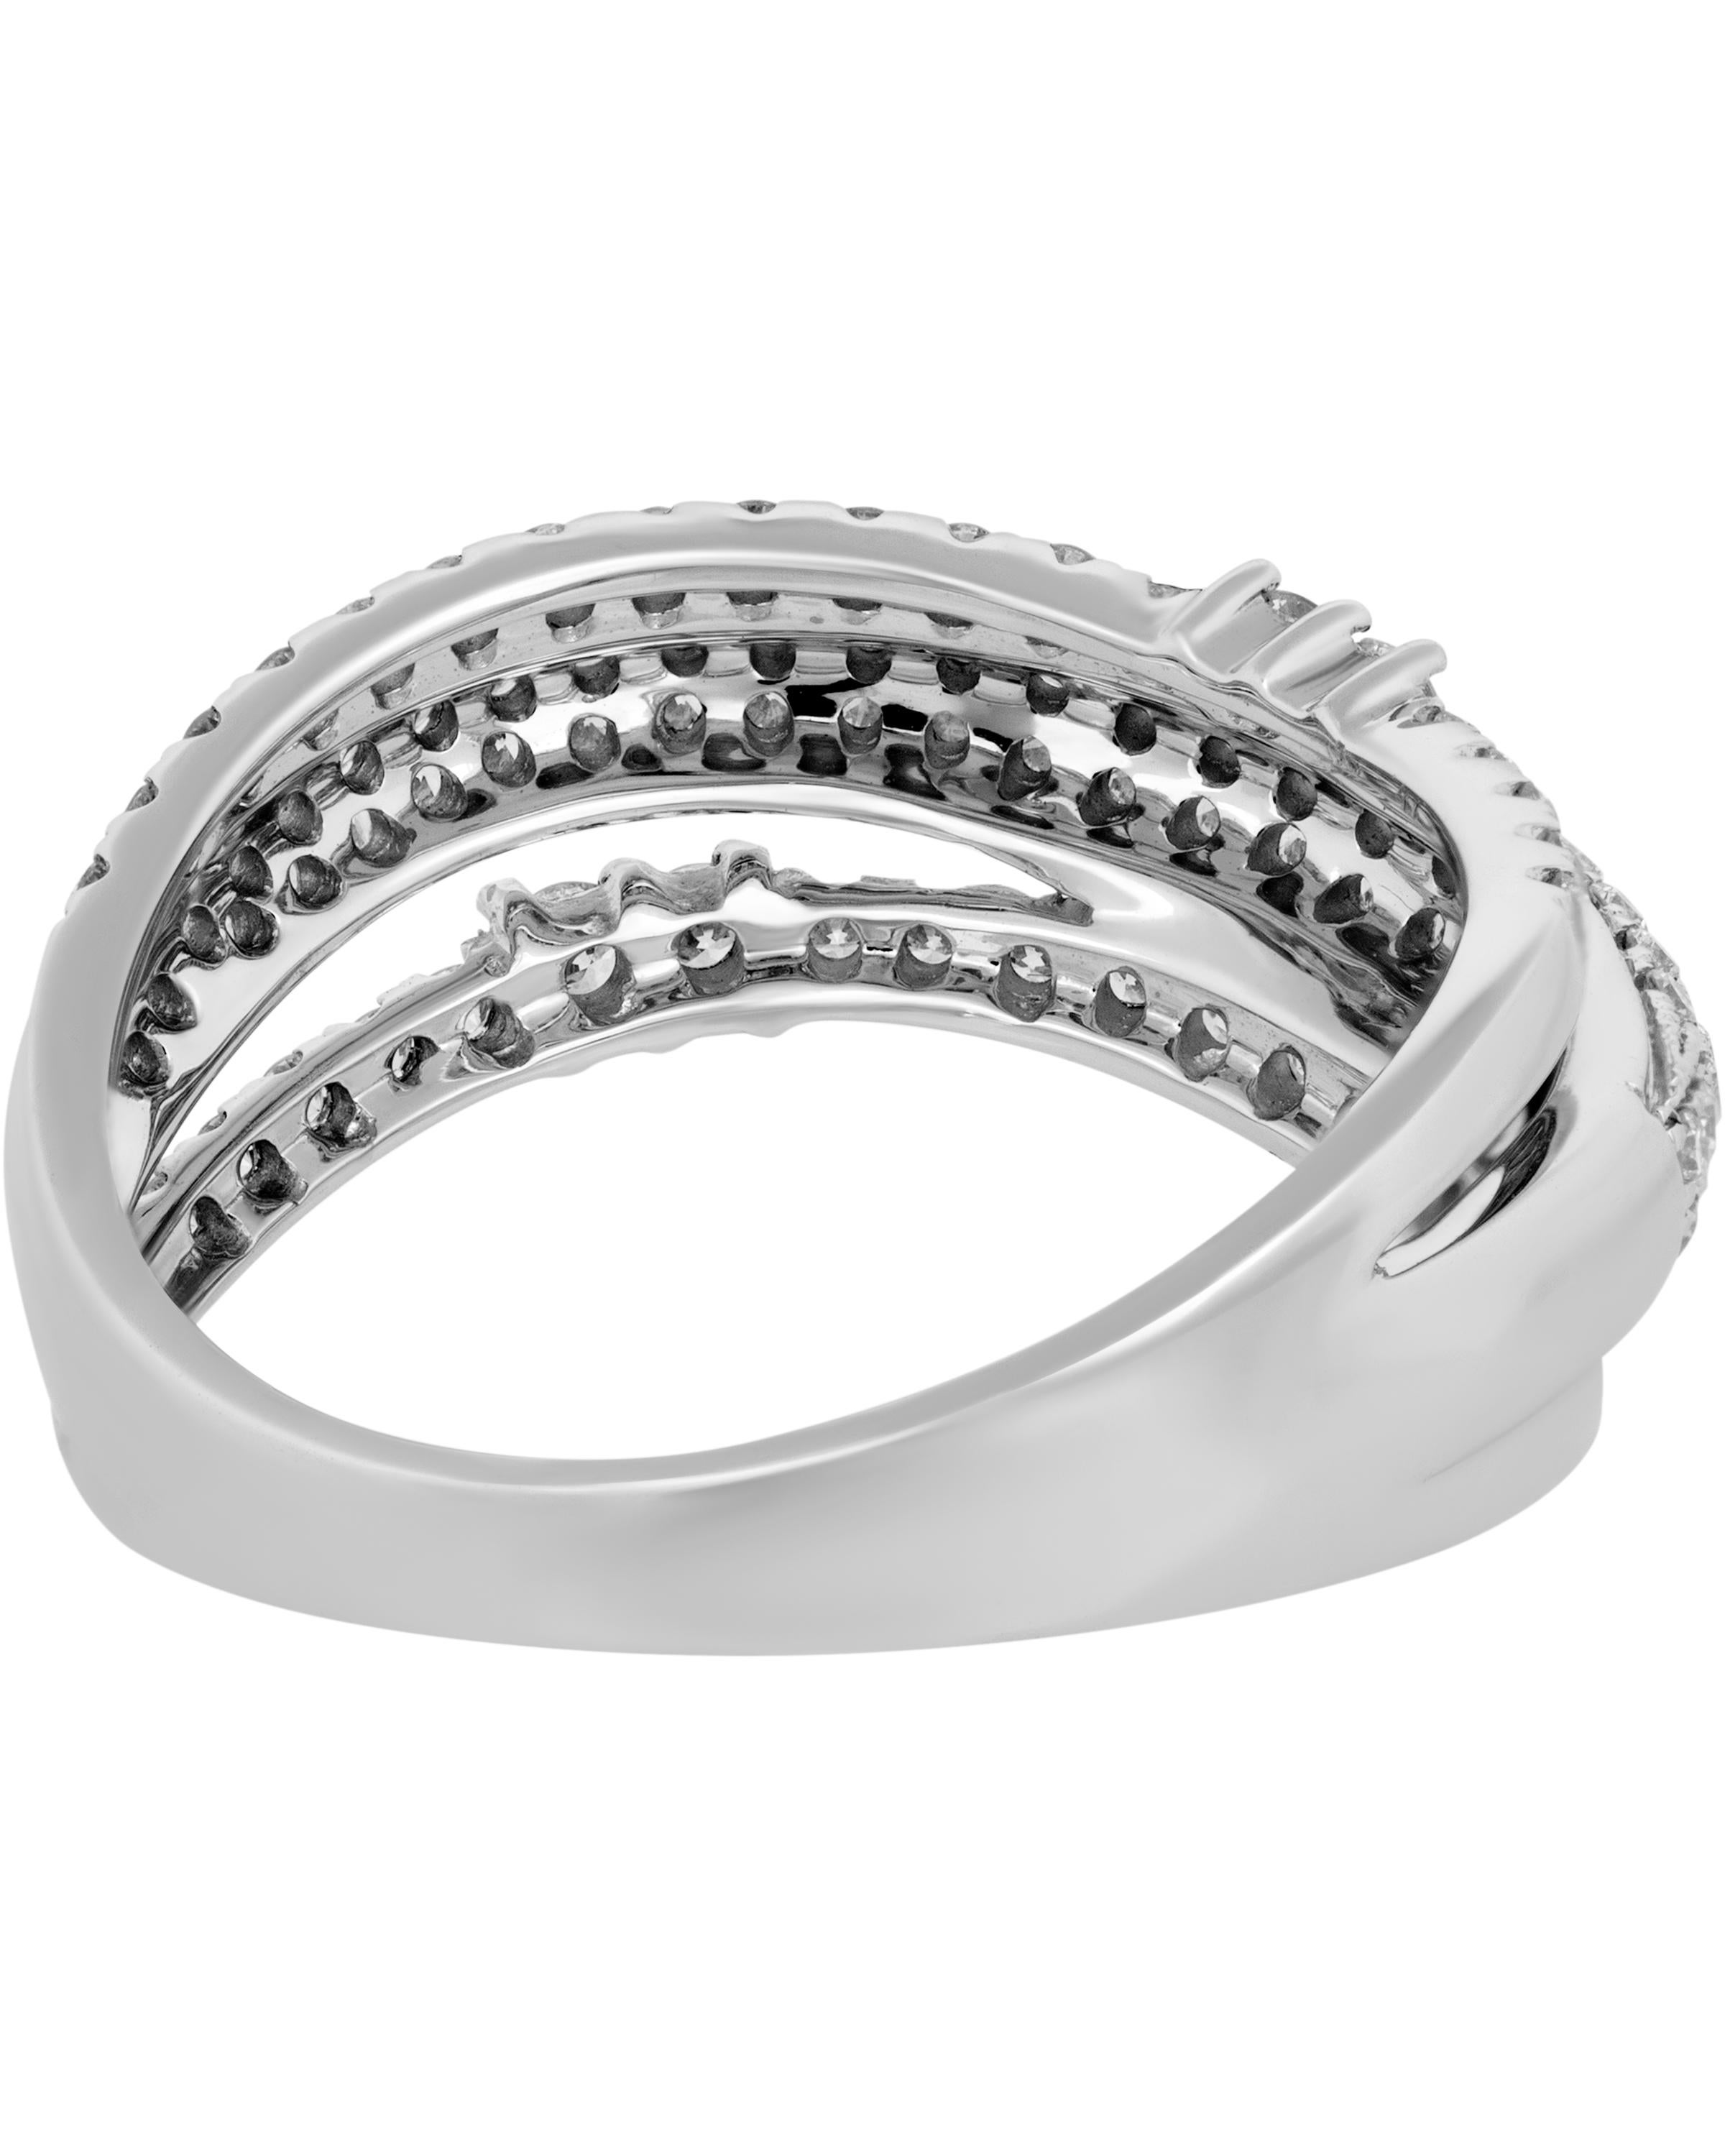 Contemporary Piero Milano 18K White Gold Diamond Ring Sz 7 For Sale